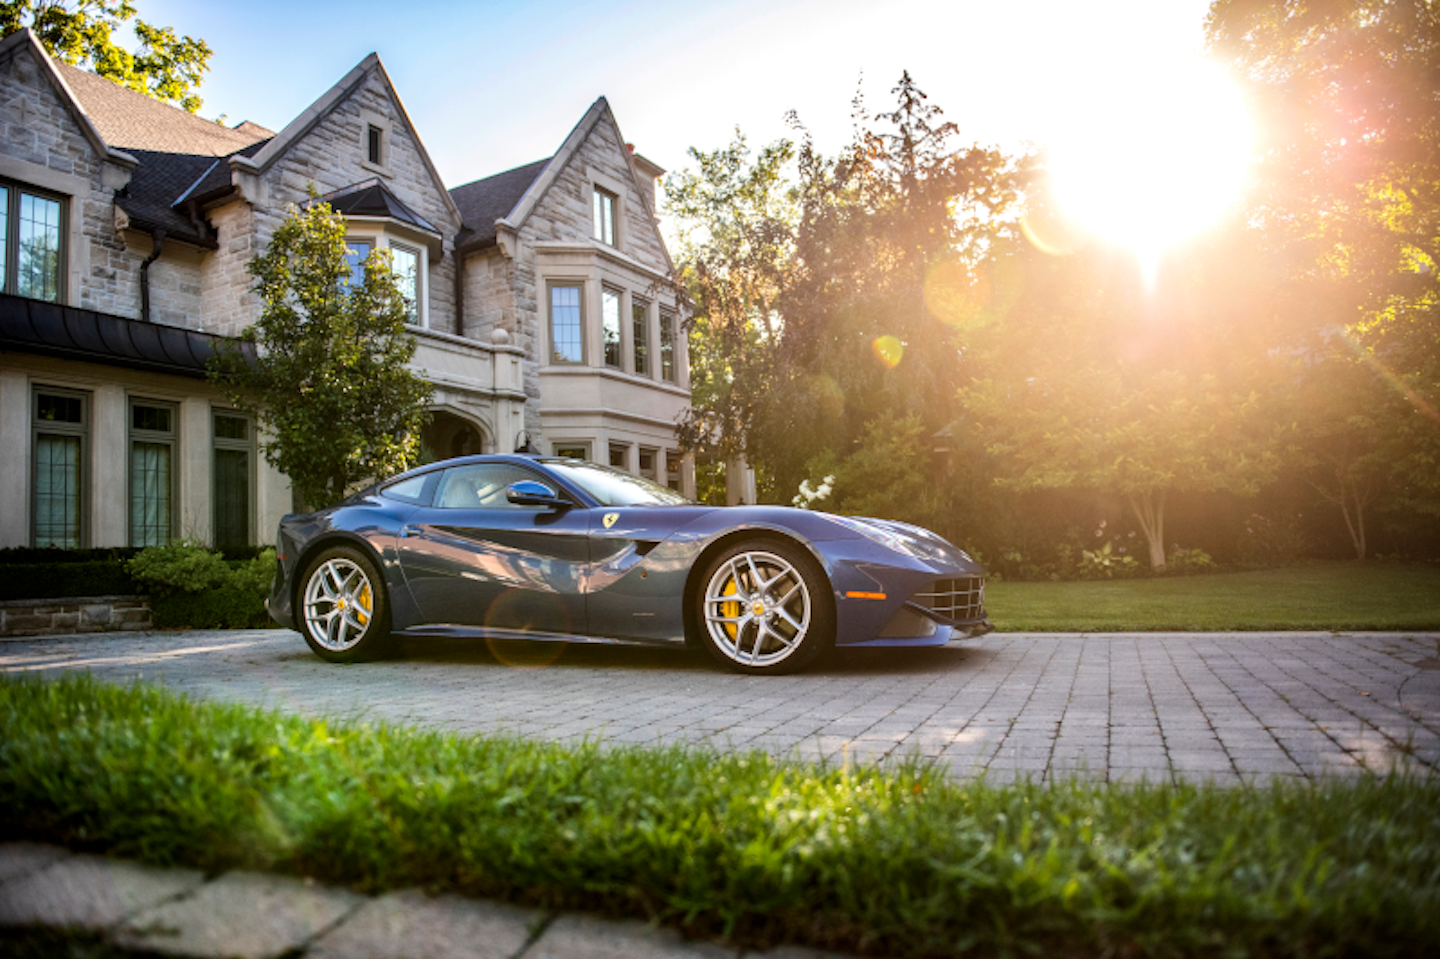 Ferrari parked at a home